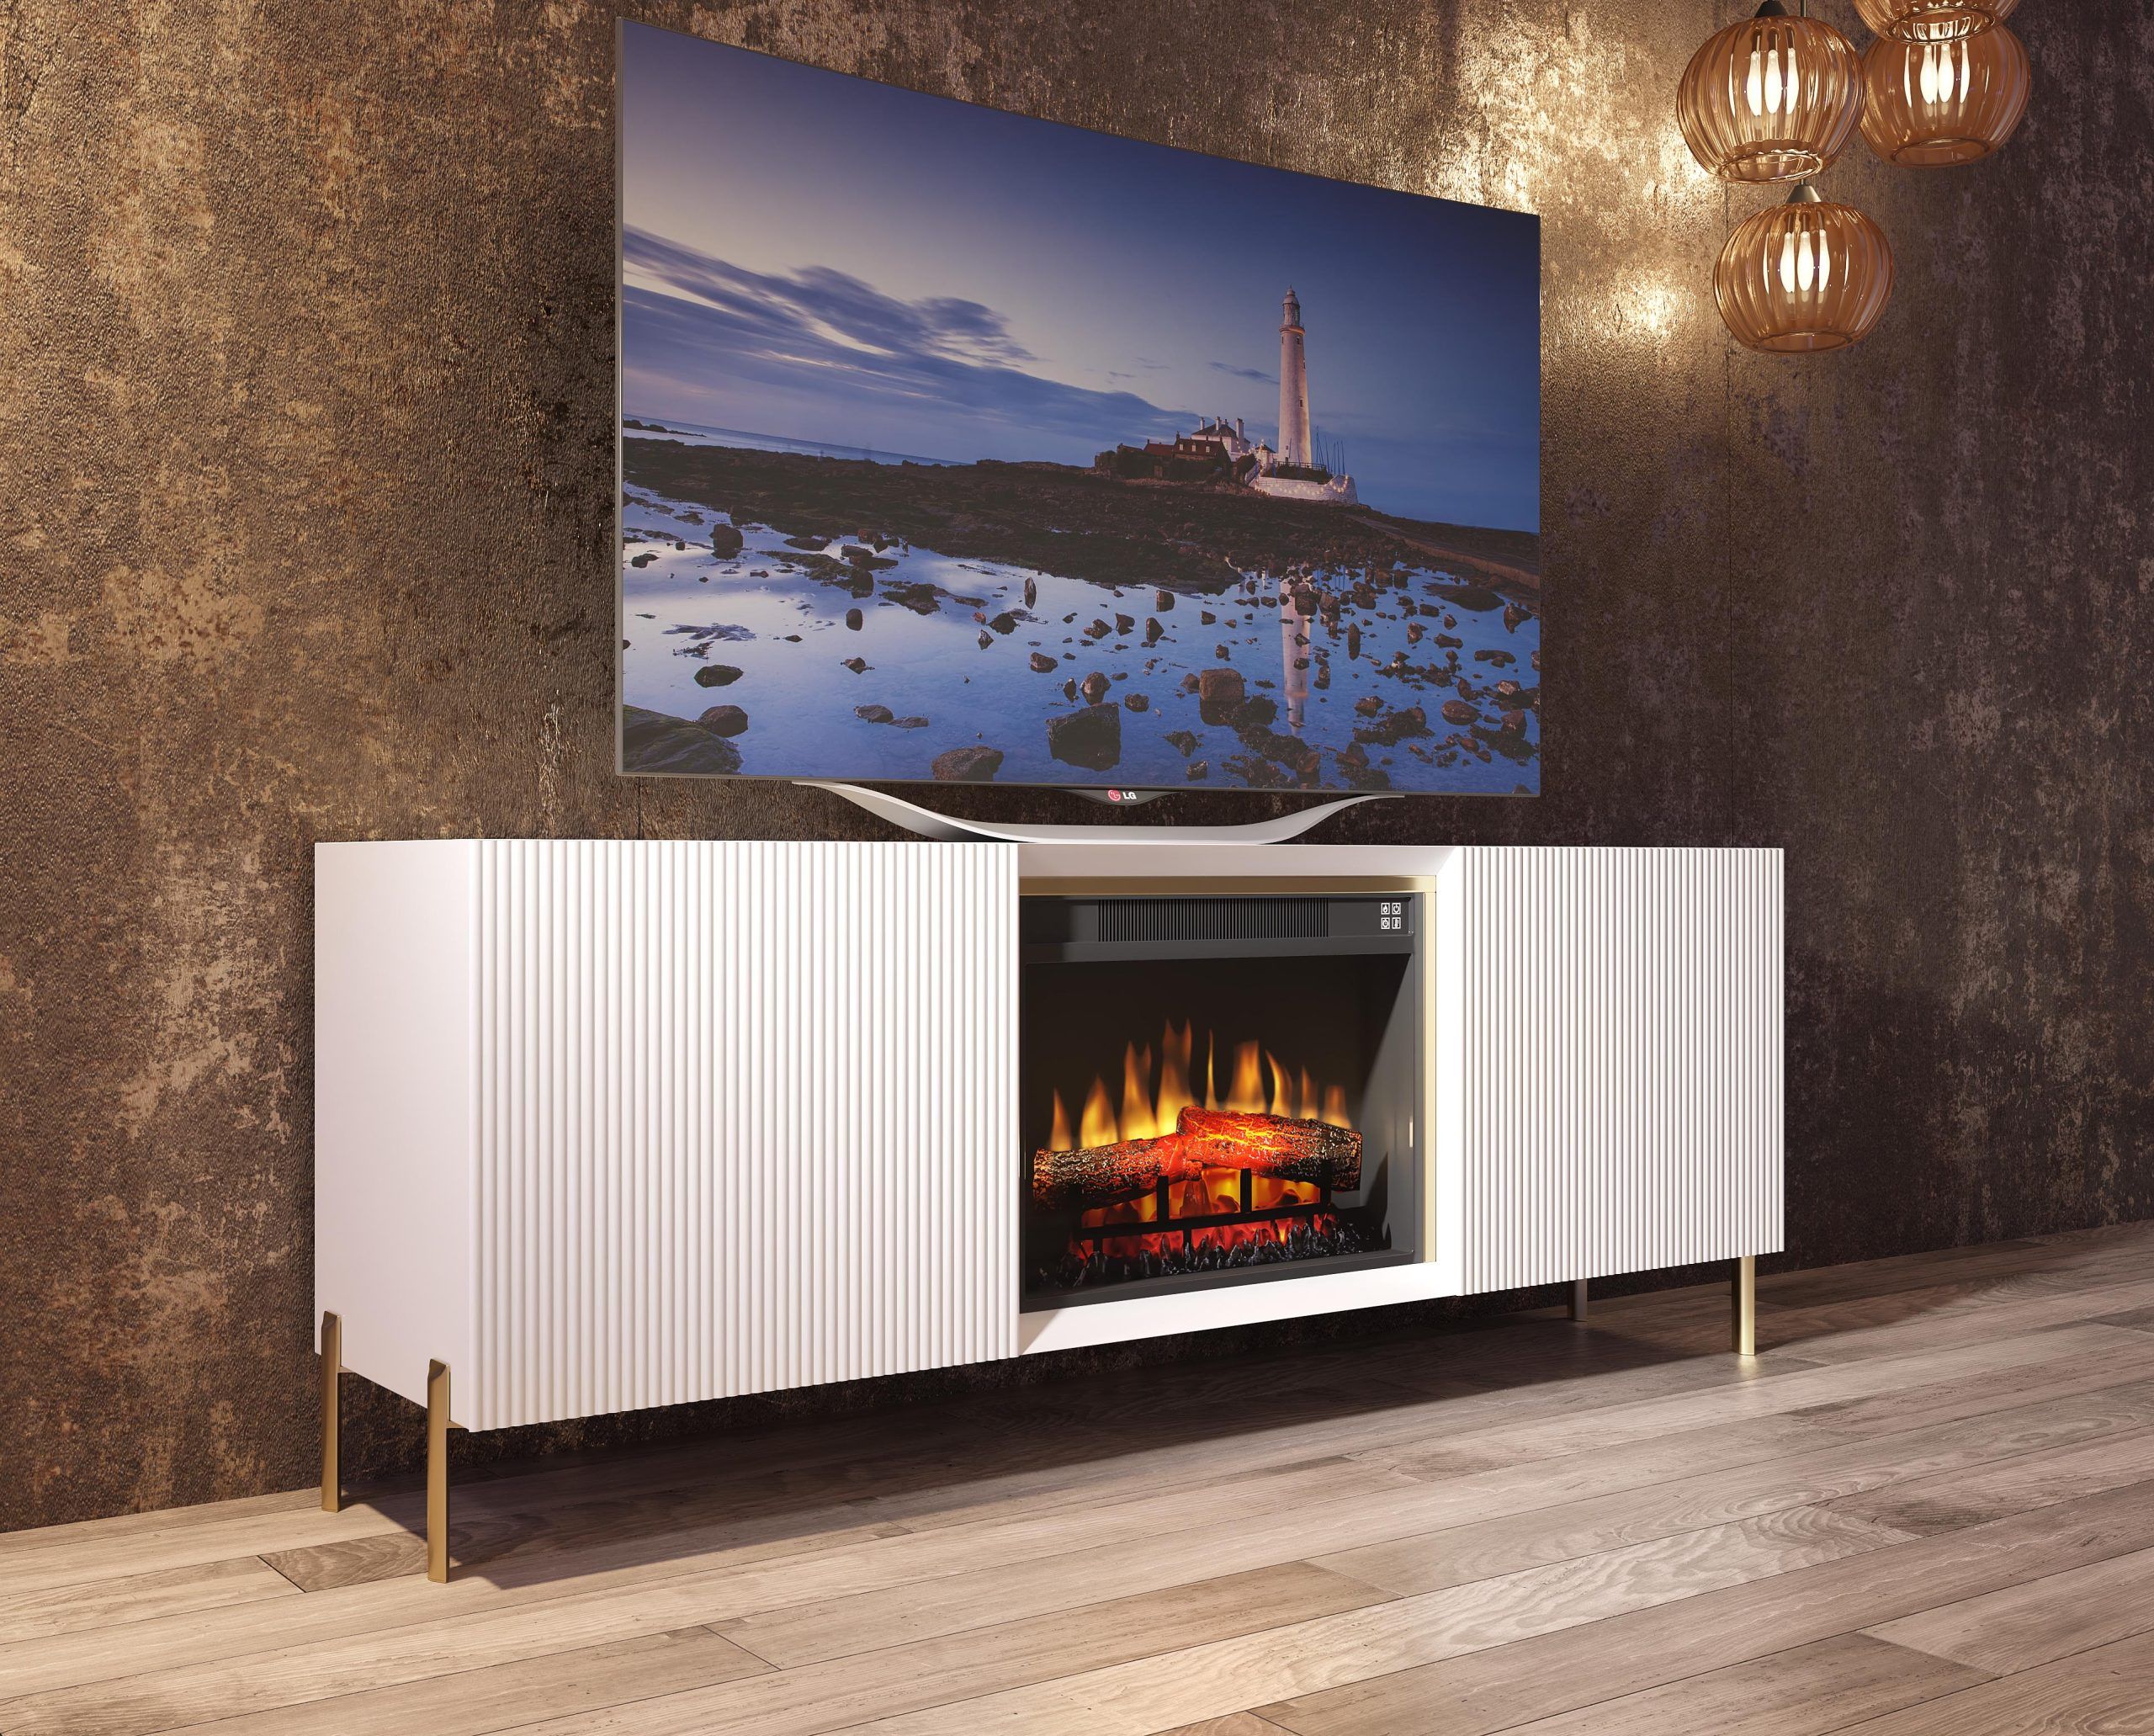 Mueble TV chimenea moderno - Franco Furniture